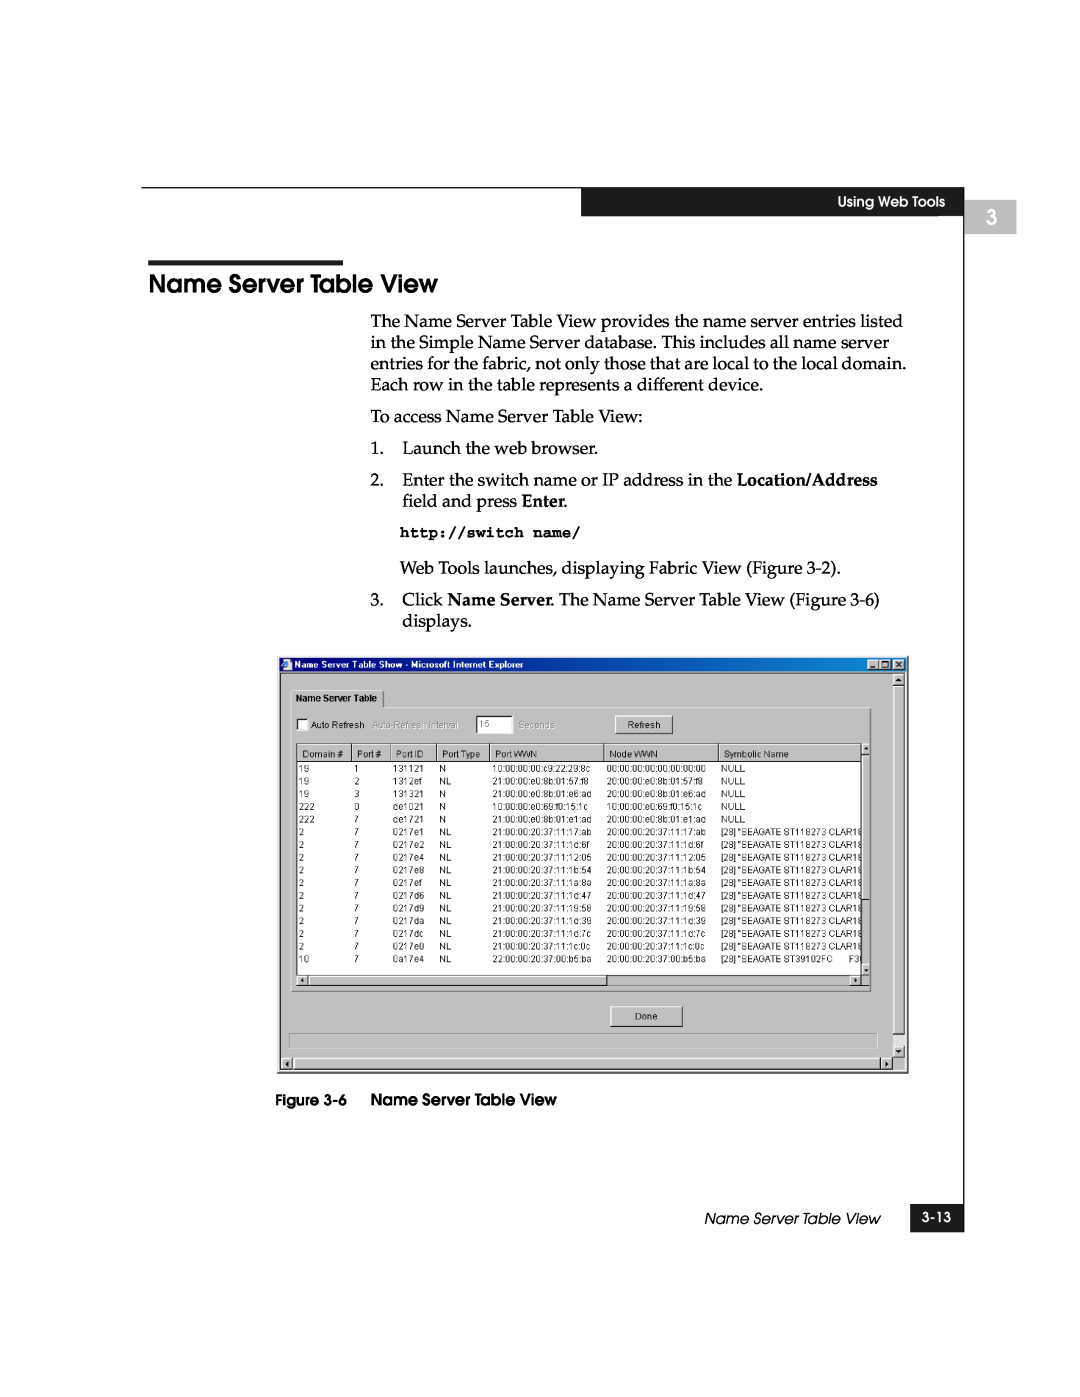 EMC DS-8B manual 6 Name Server Table View 